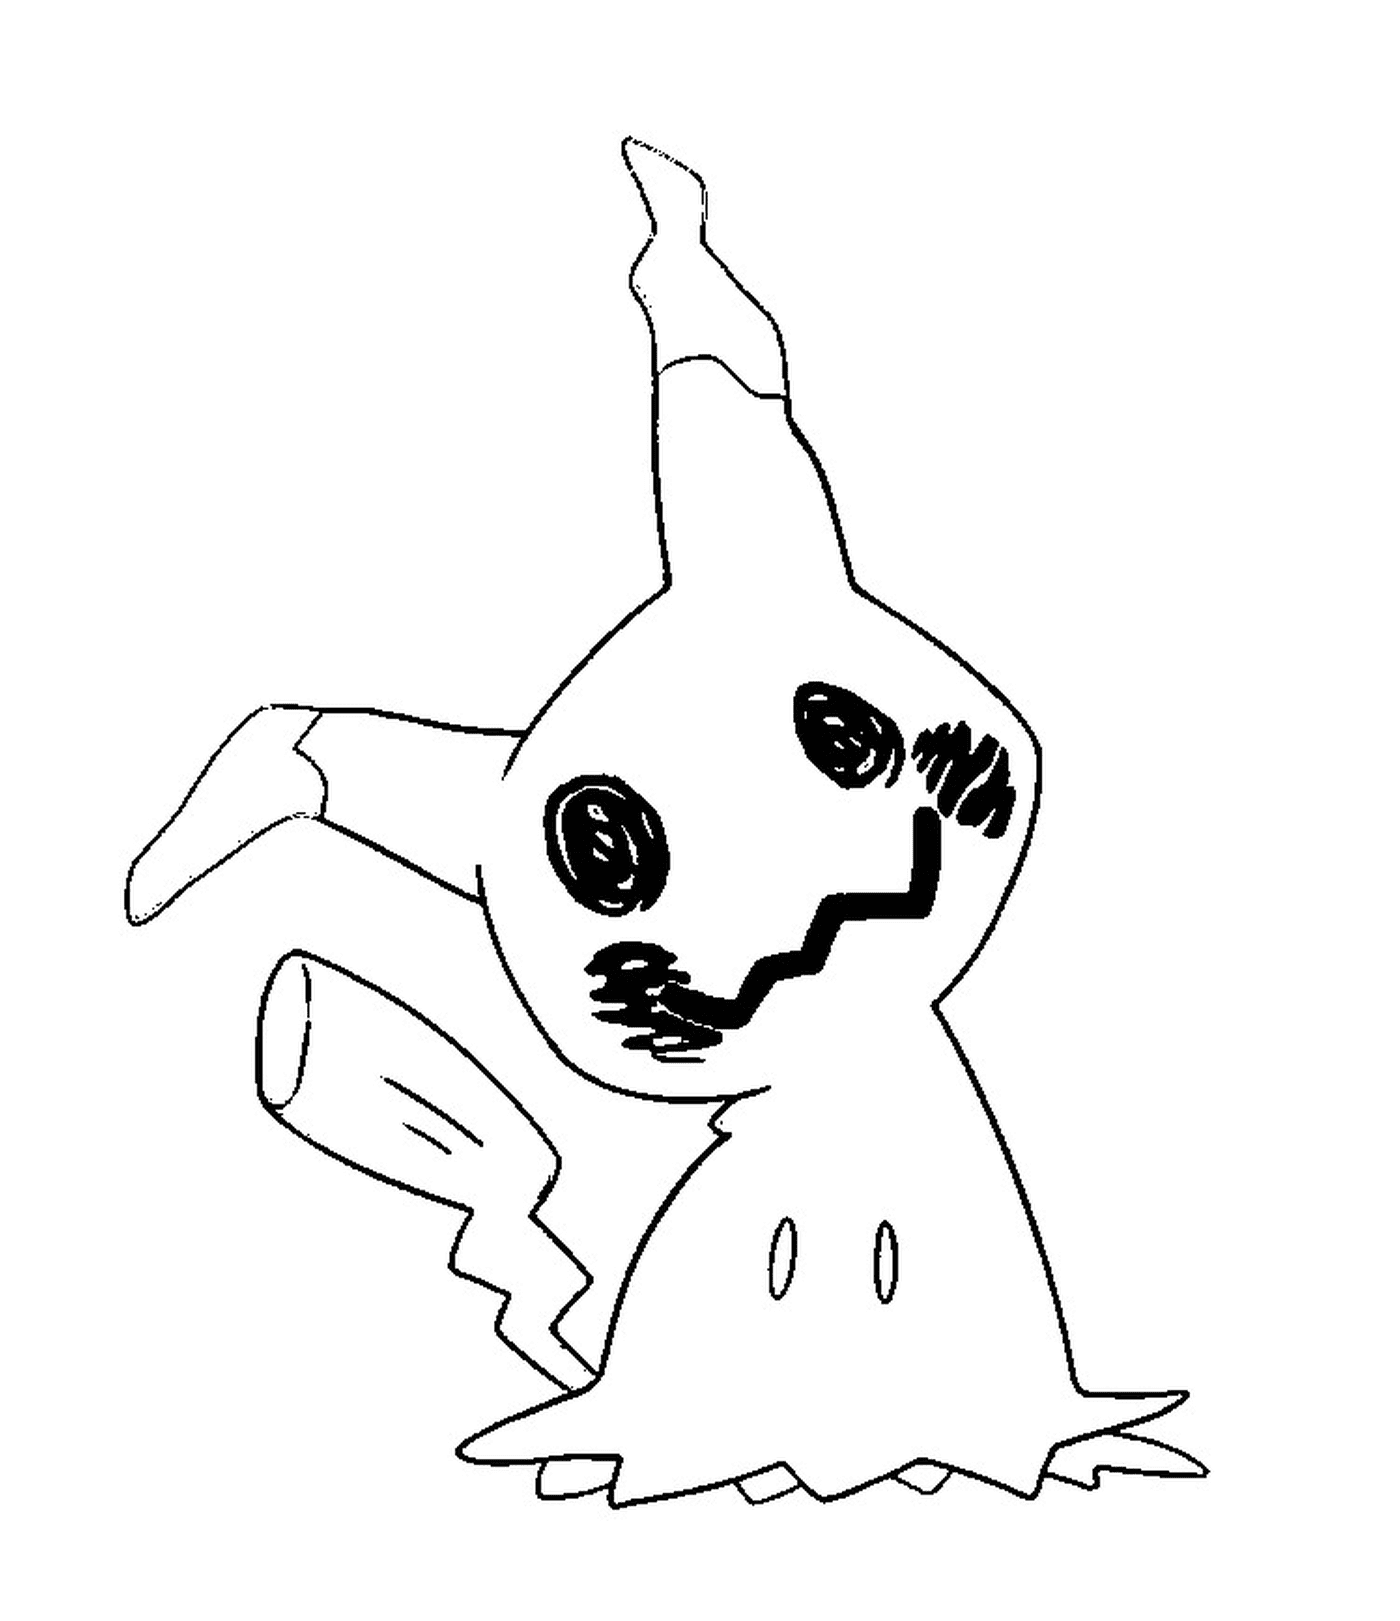  Mimiqui, a Pikachu 